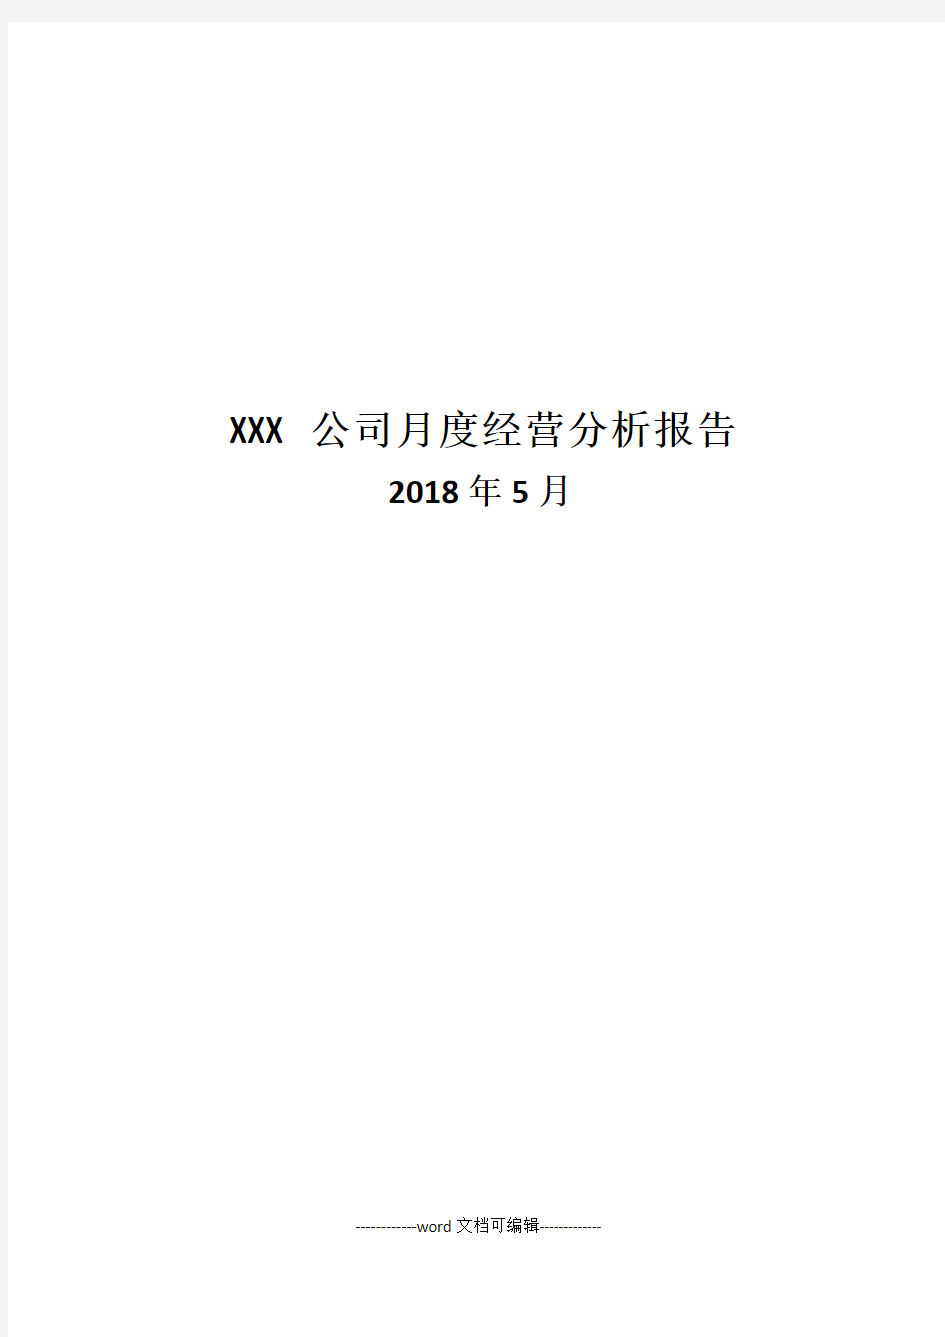 xxx公司月度经营分析报告.docx